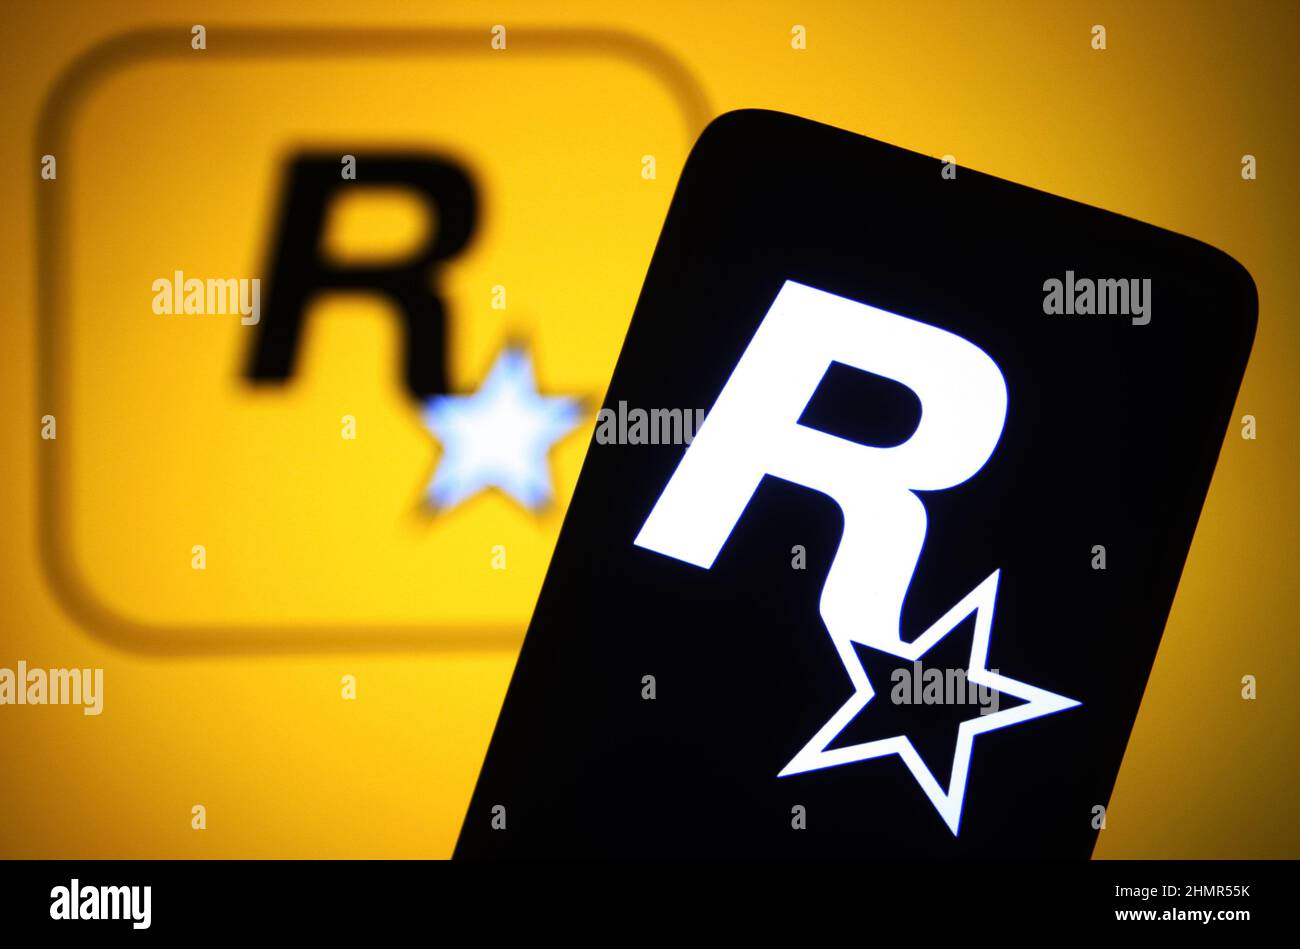 Rockstar Games Computer Icons Black & White Rockstar North Font, joystick  transparent background PNG clipart